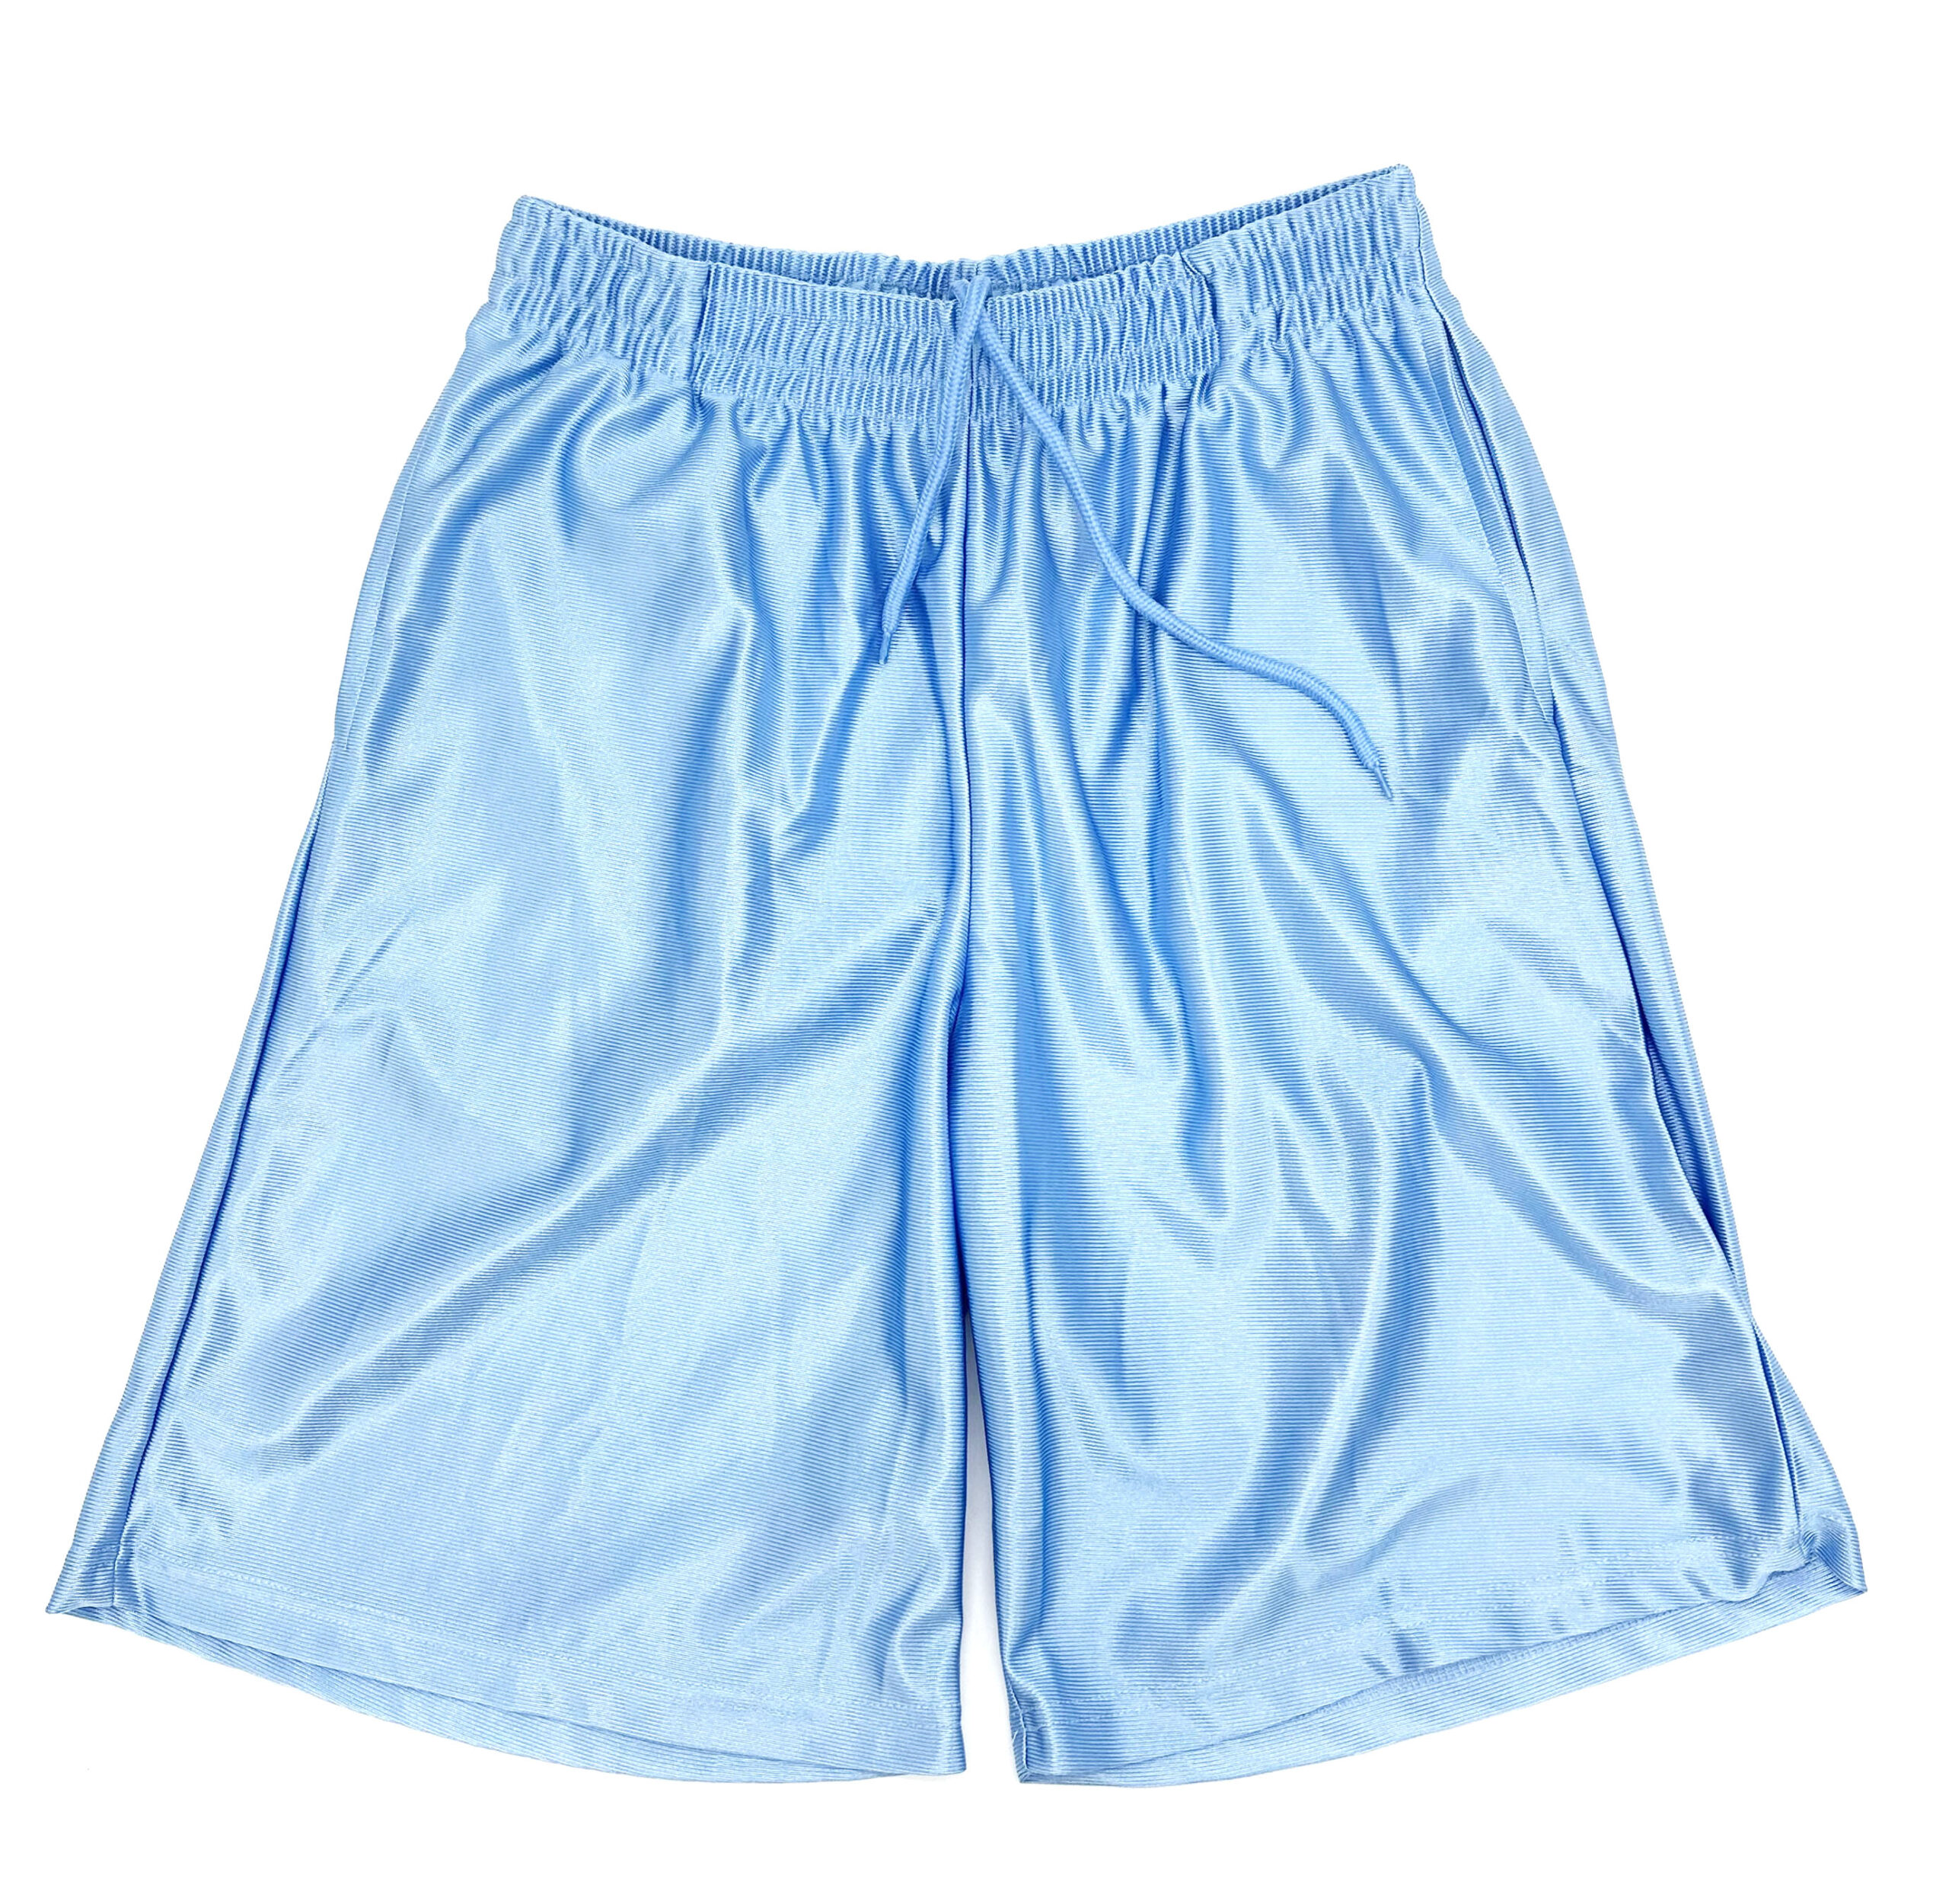 Light blue dazzle shorts - SBOXERS